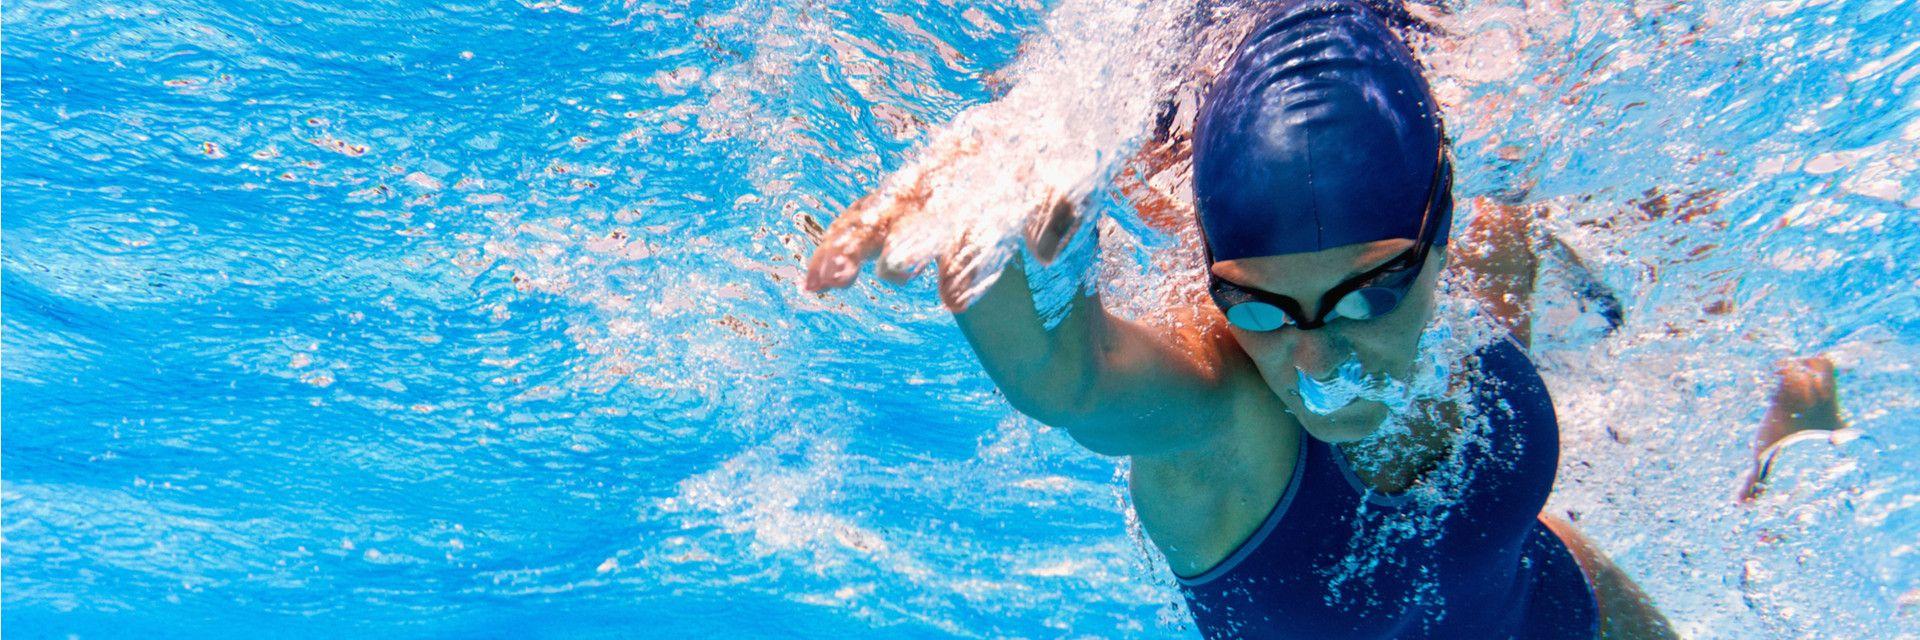 common swimming injuries 